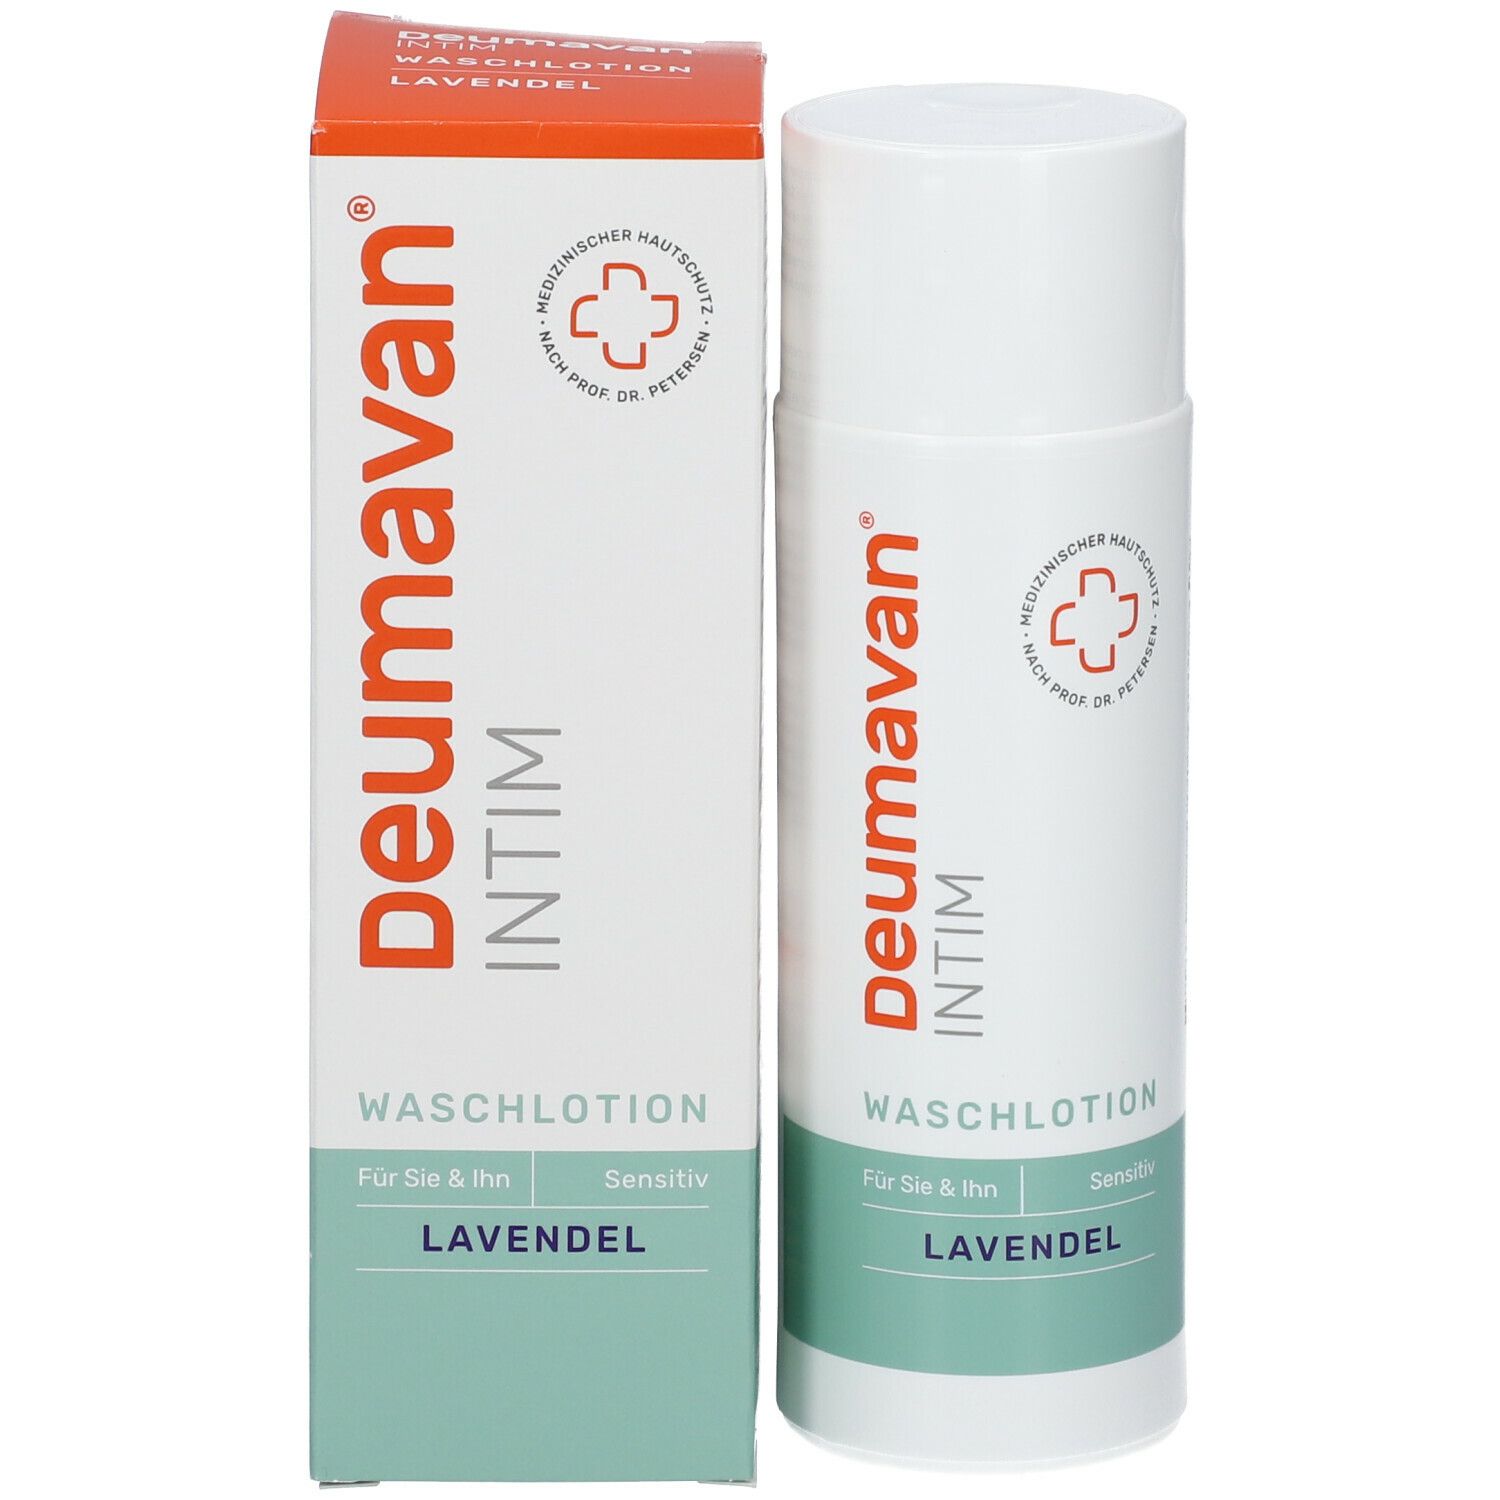 Deumavan® Lavendel Waschlotion sensitiv